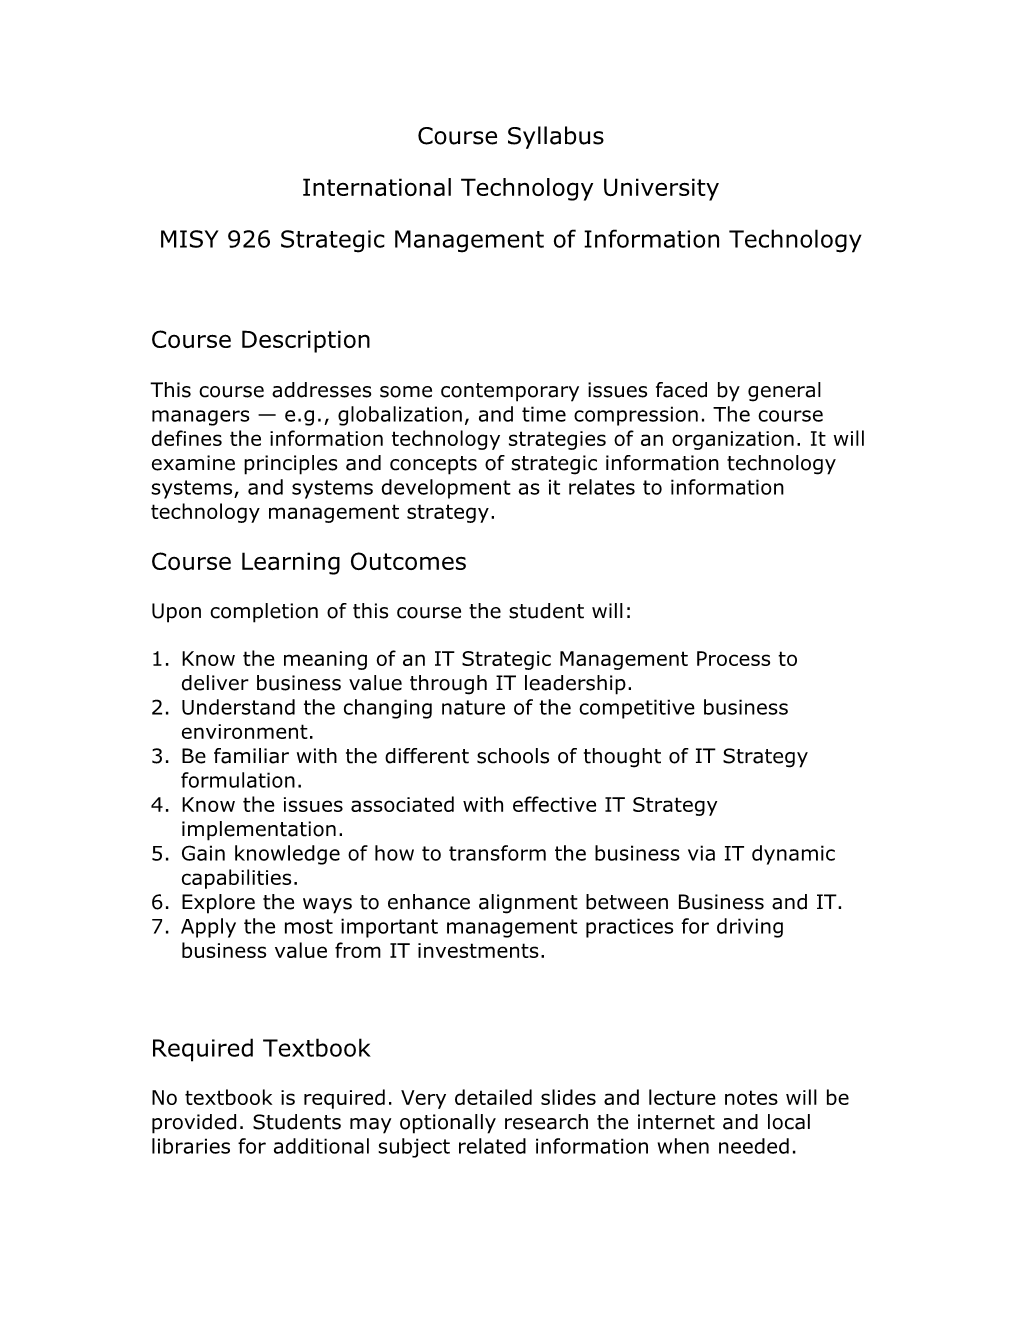 Misy926 Strategic Information Technology